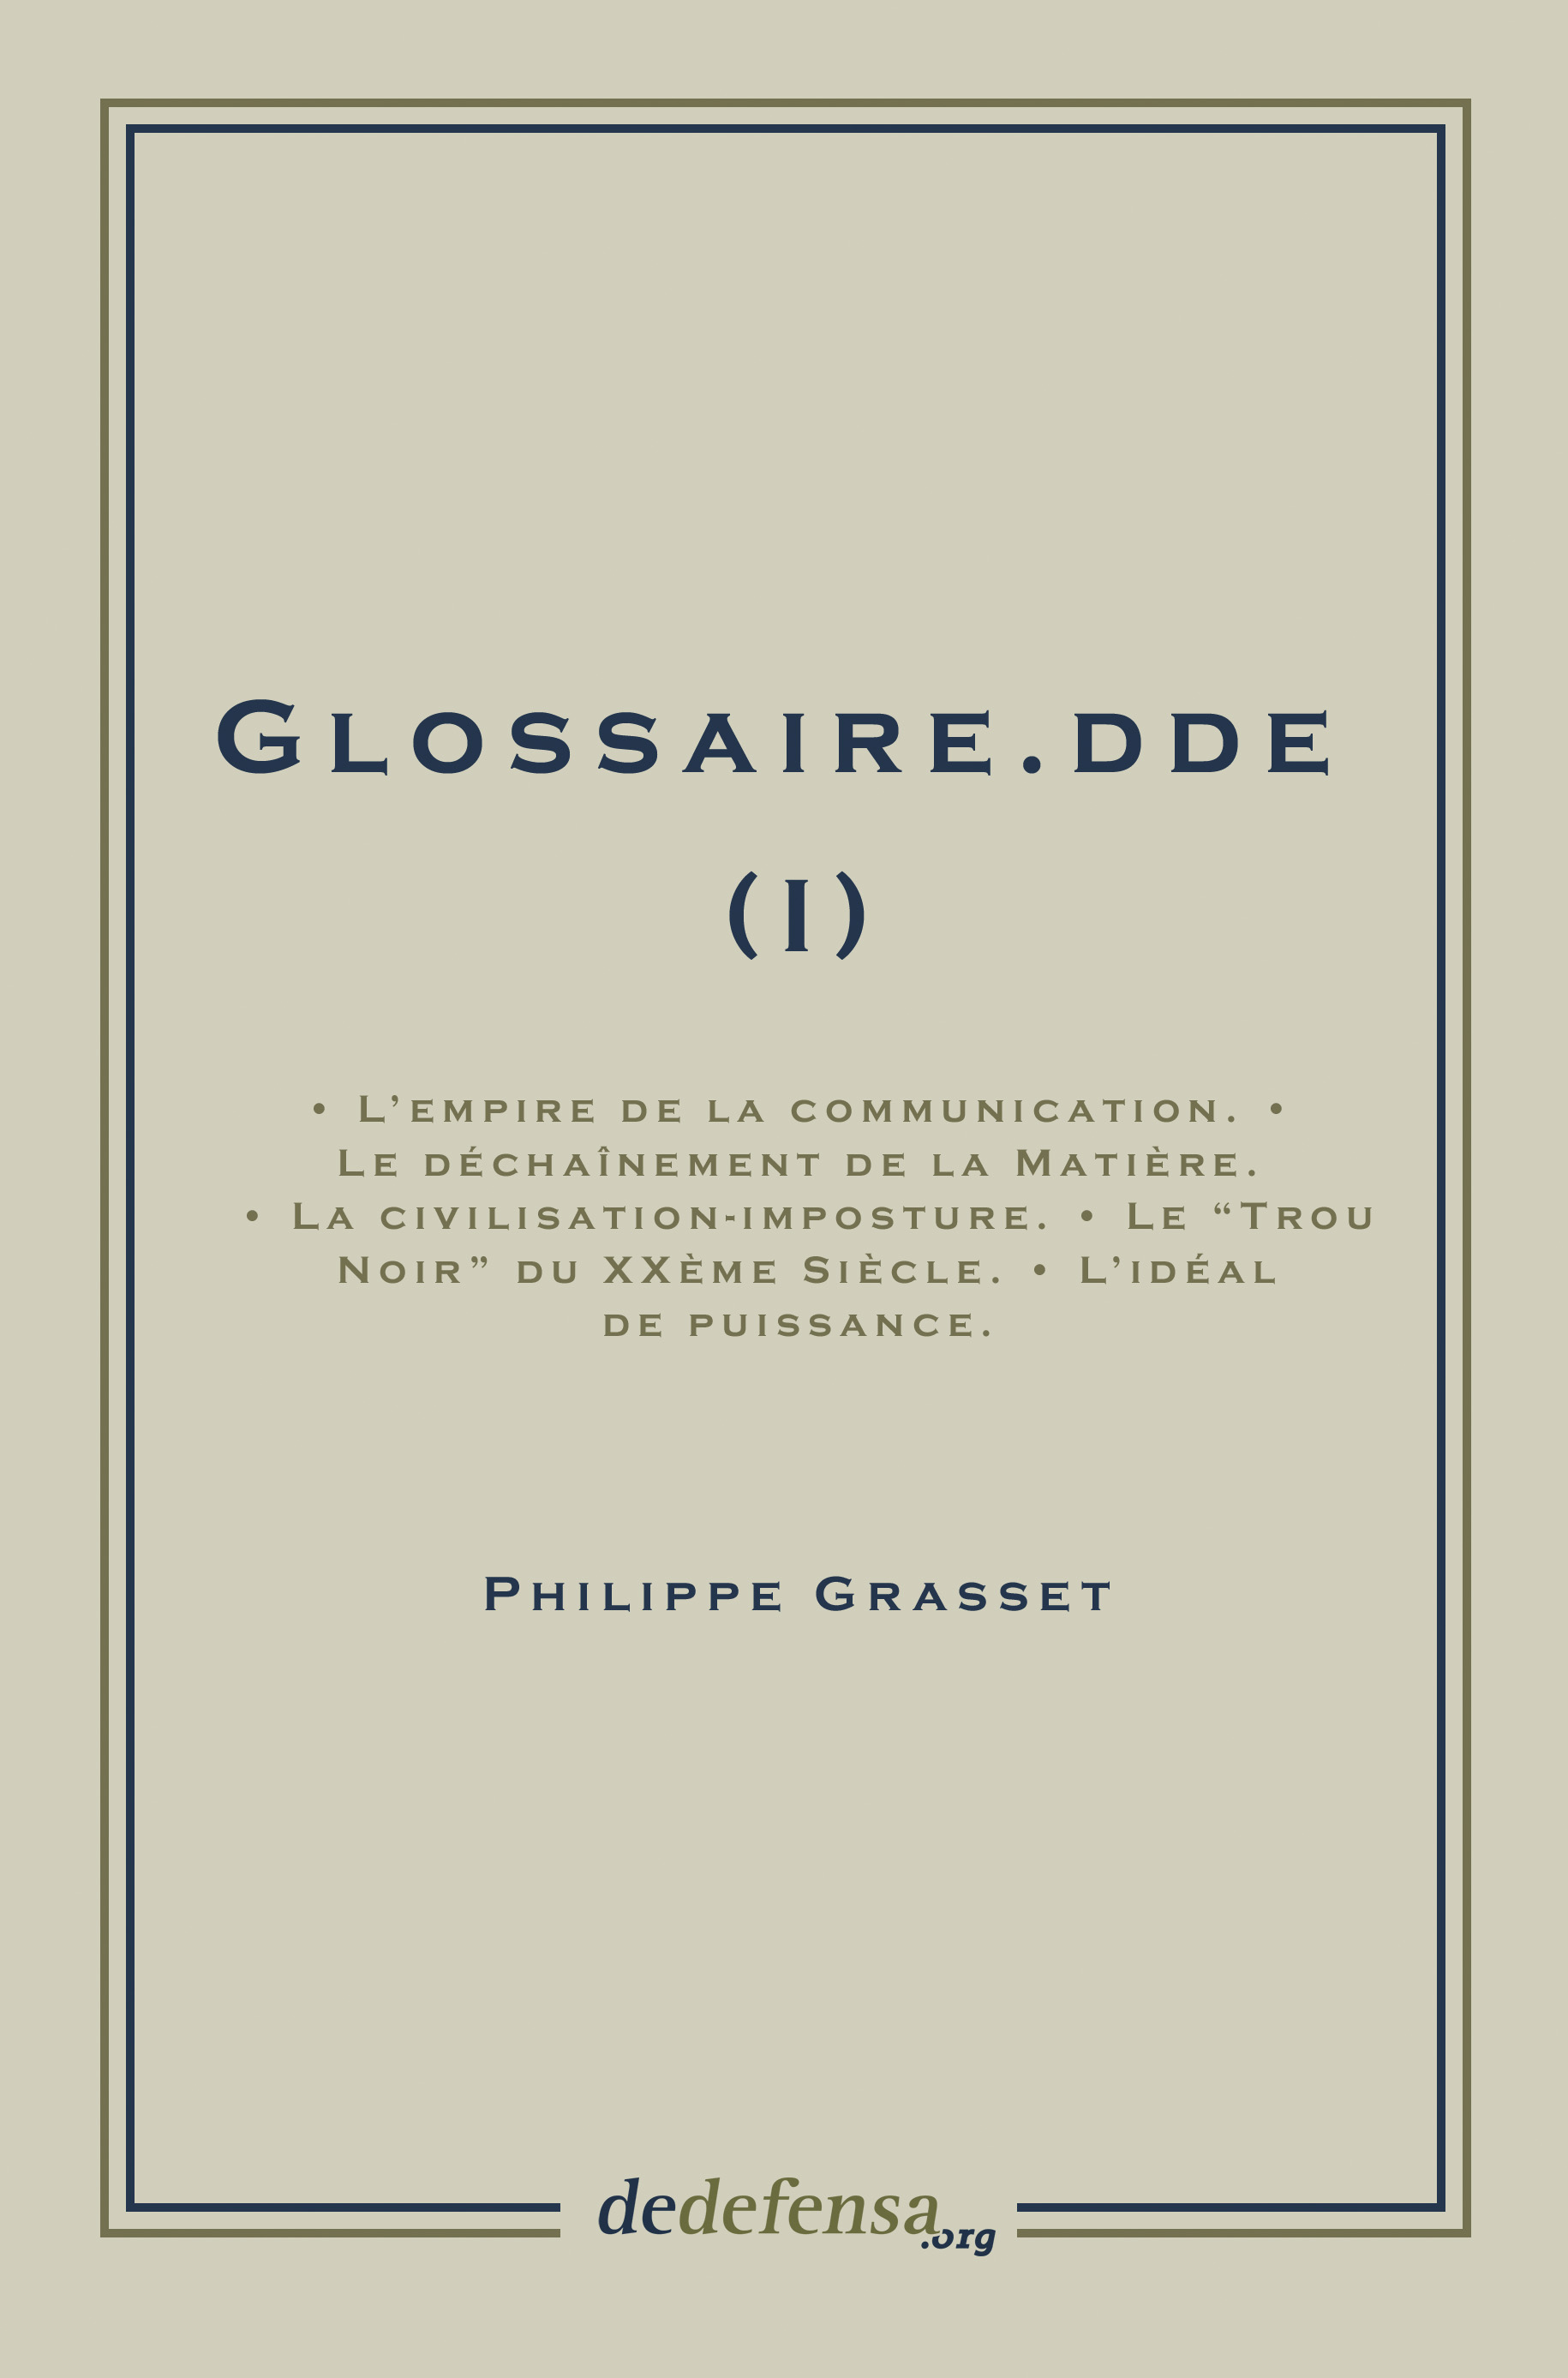 Glossaires.DDE (I)